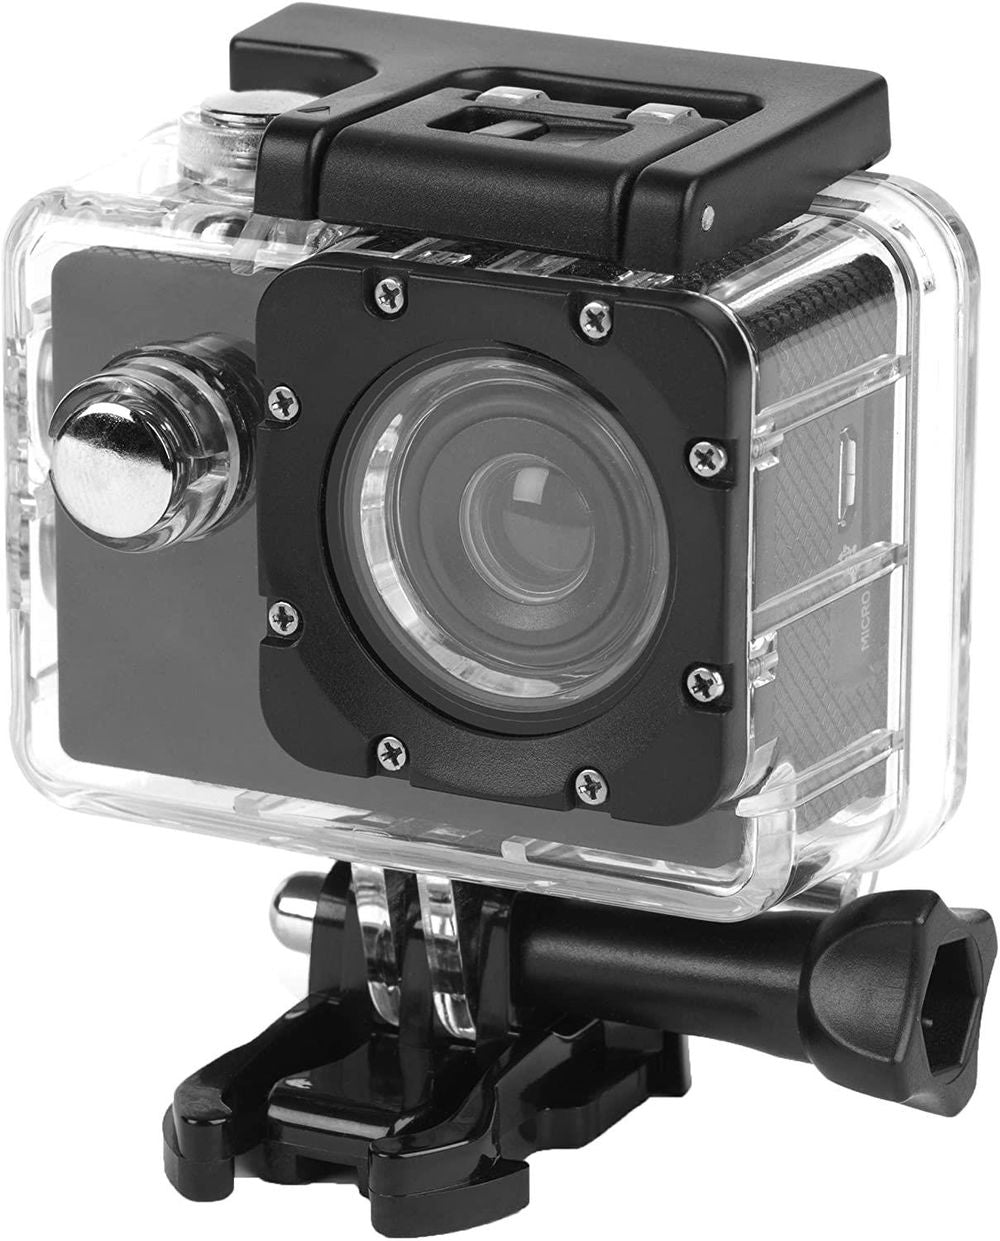 Intempo Full HD Waterproof Action Camera